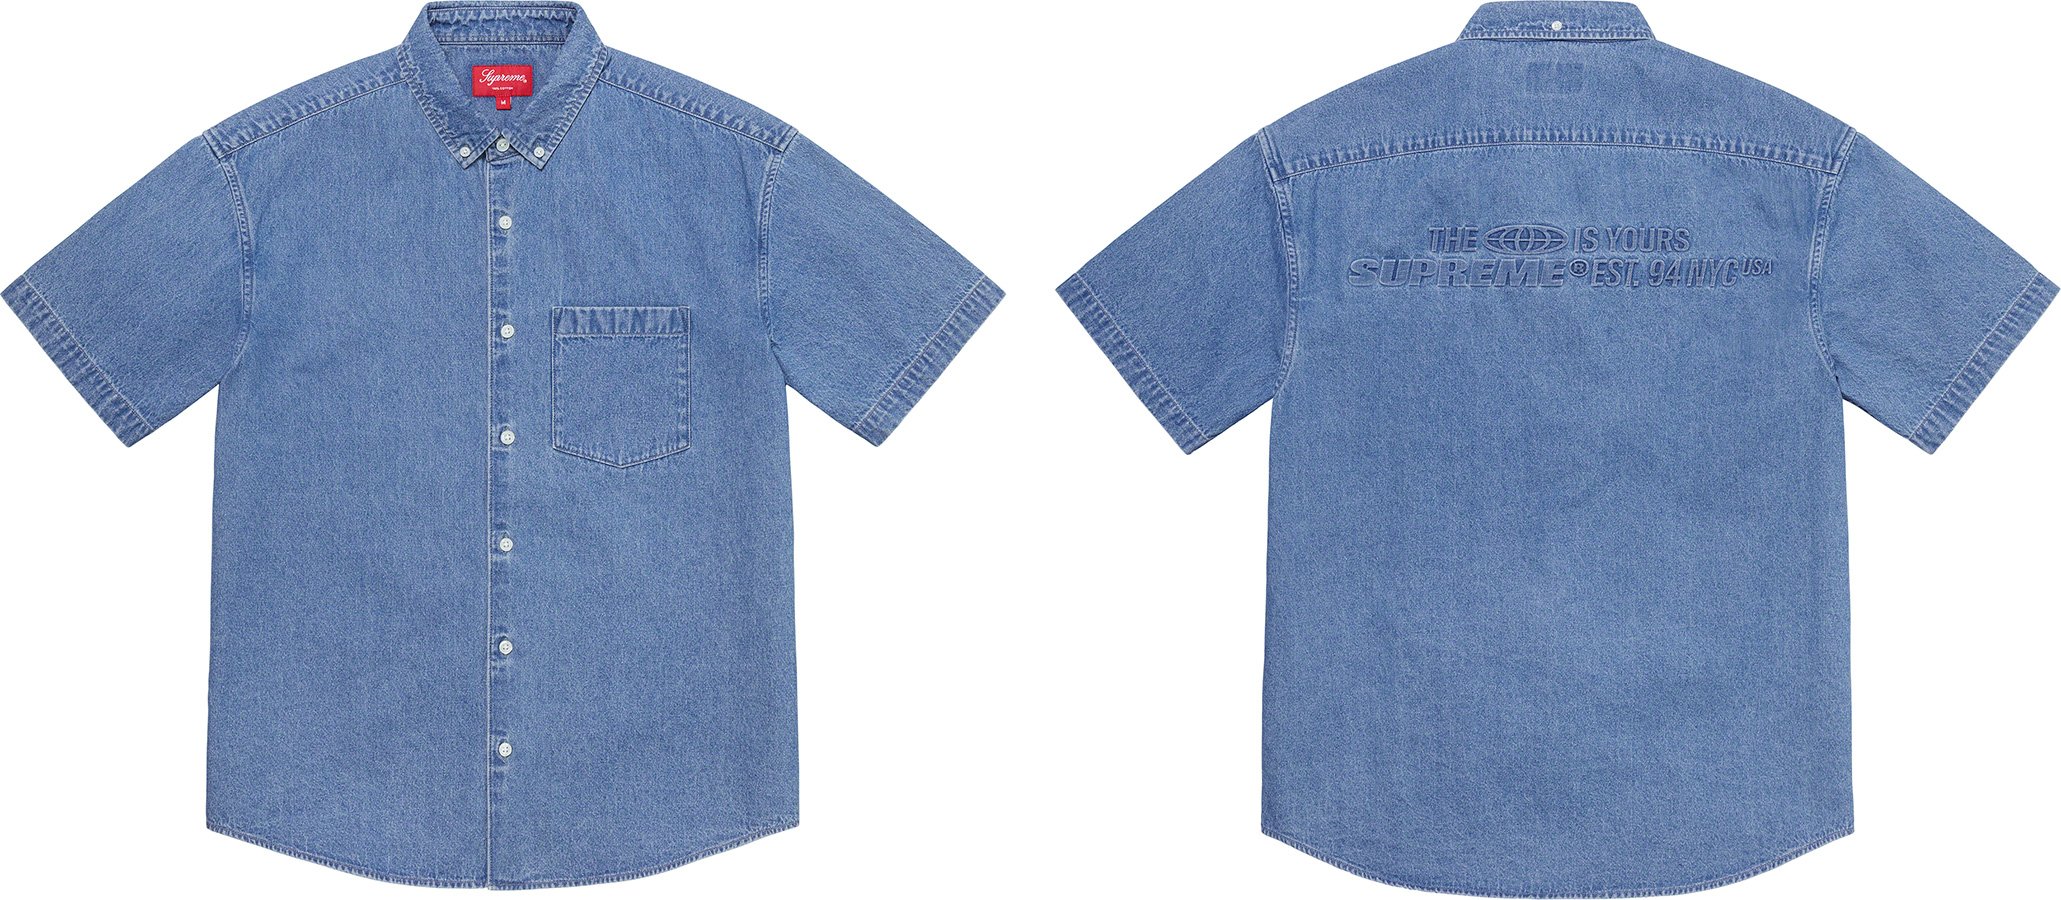 Embossed Denim S S Shirt - spring summer 2021 - Supreme